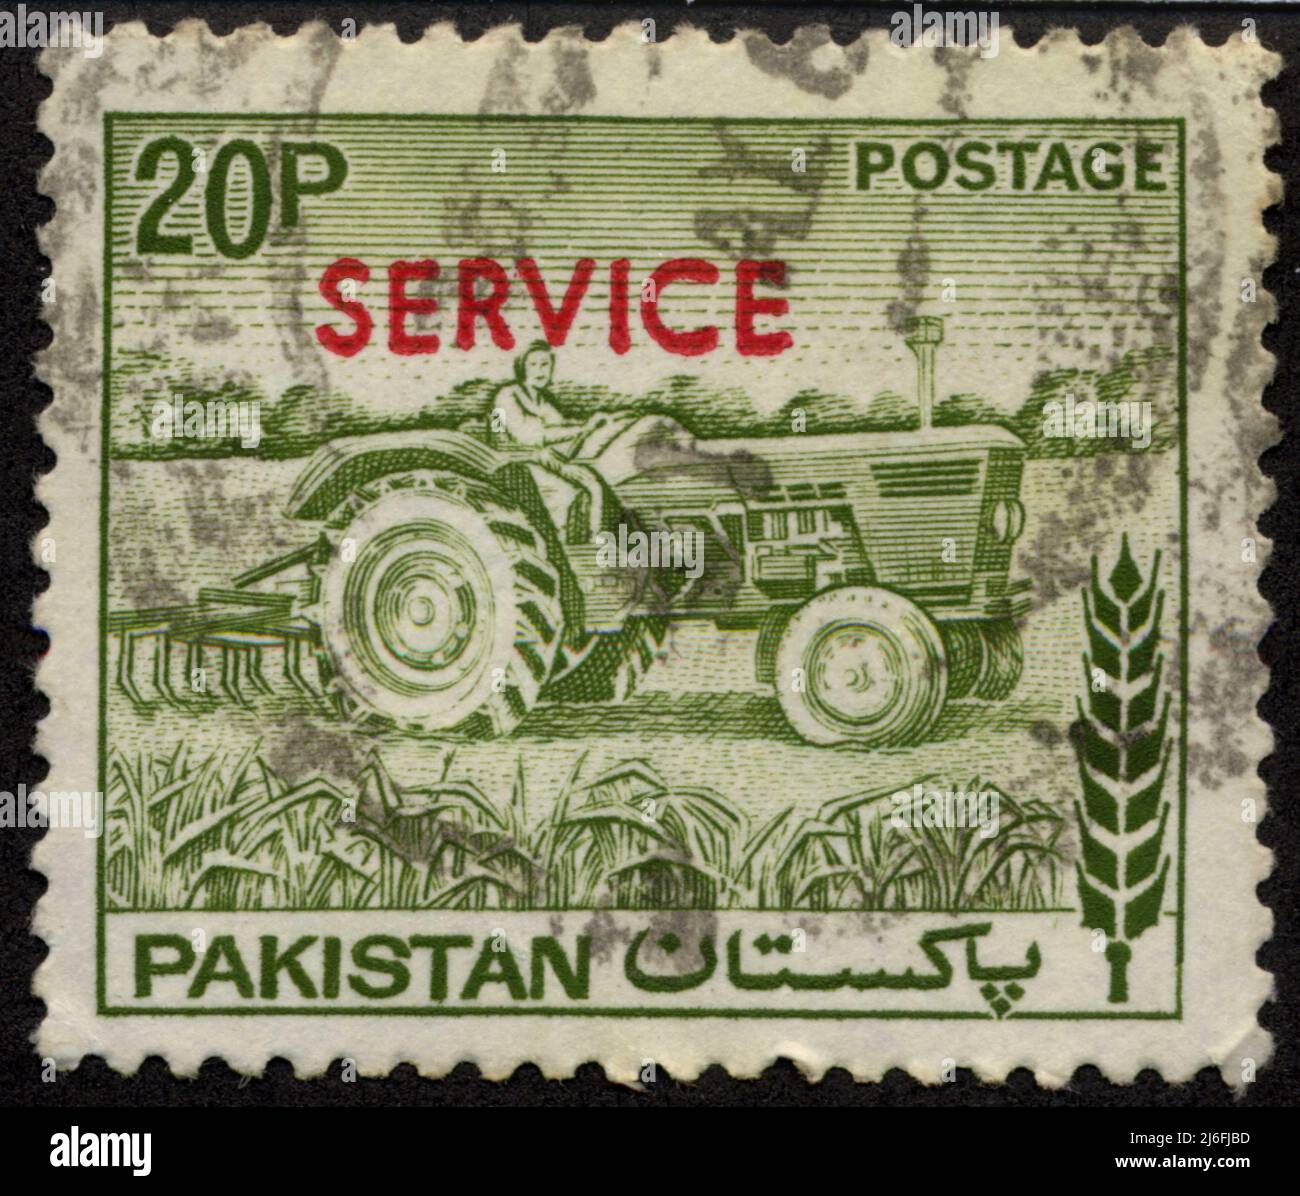 Timbre oblitéré Pakistan, 20p, Postage, Service, Stock Photo